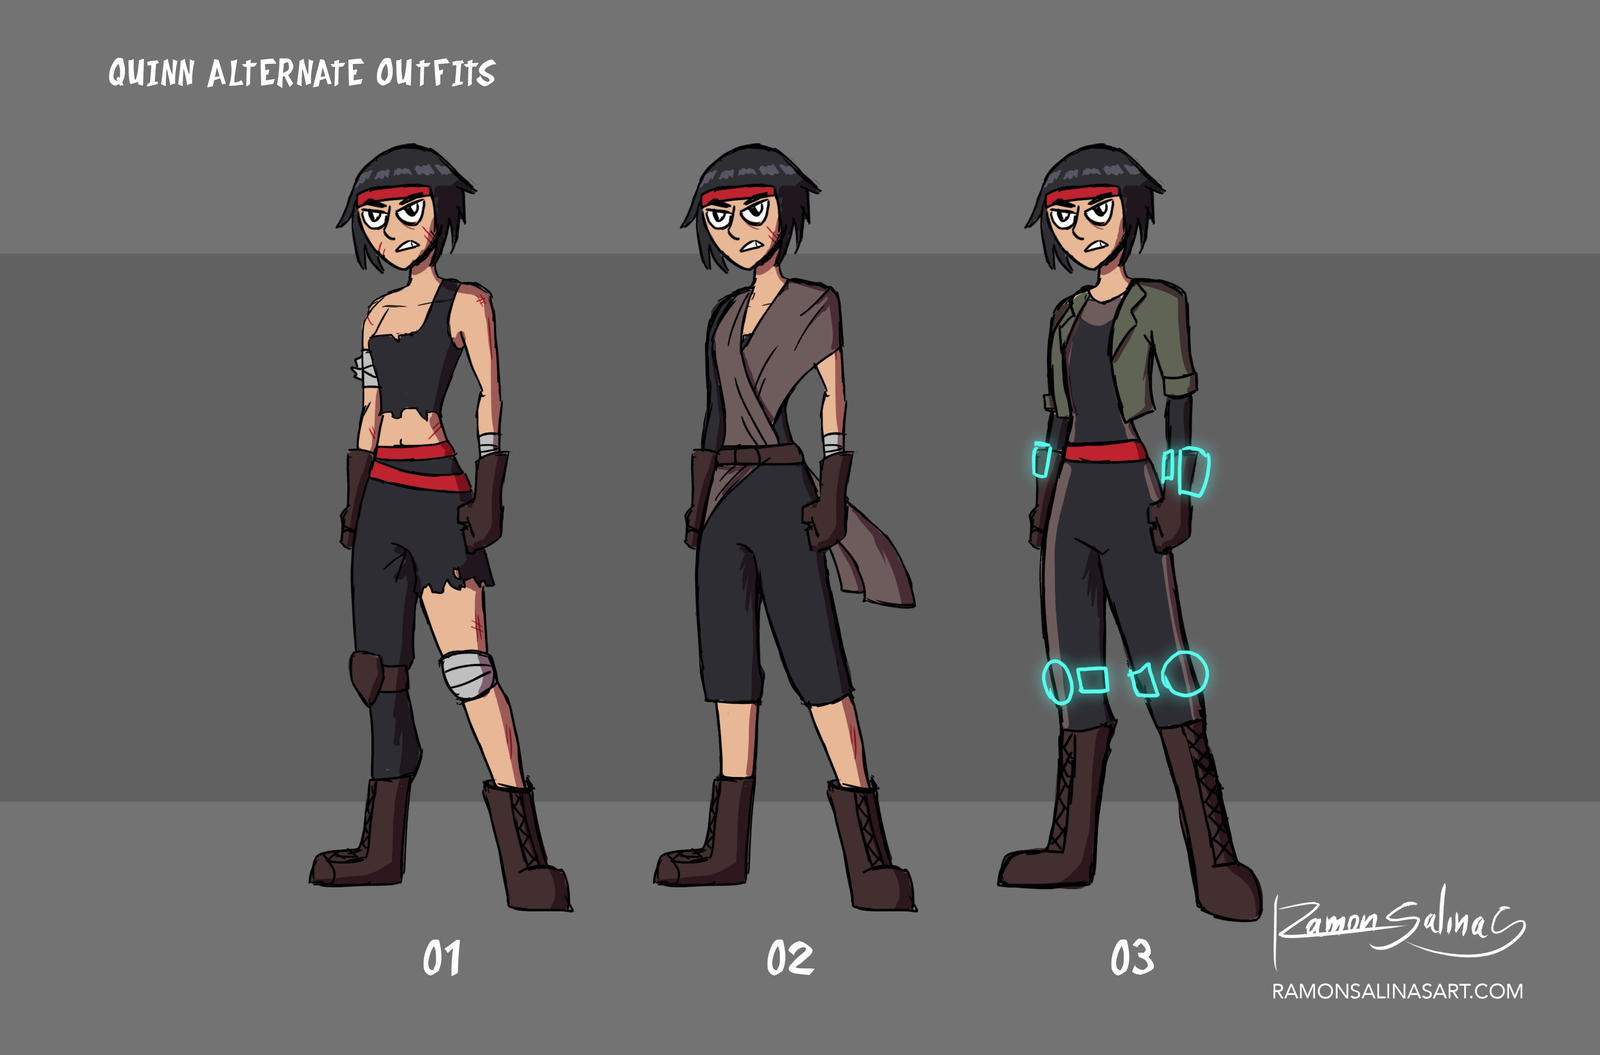 Quinn Alternate Outfits